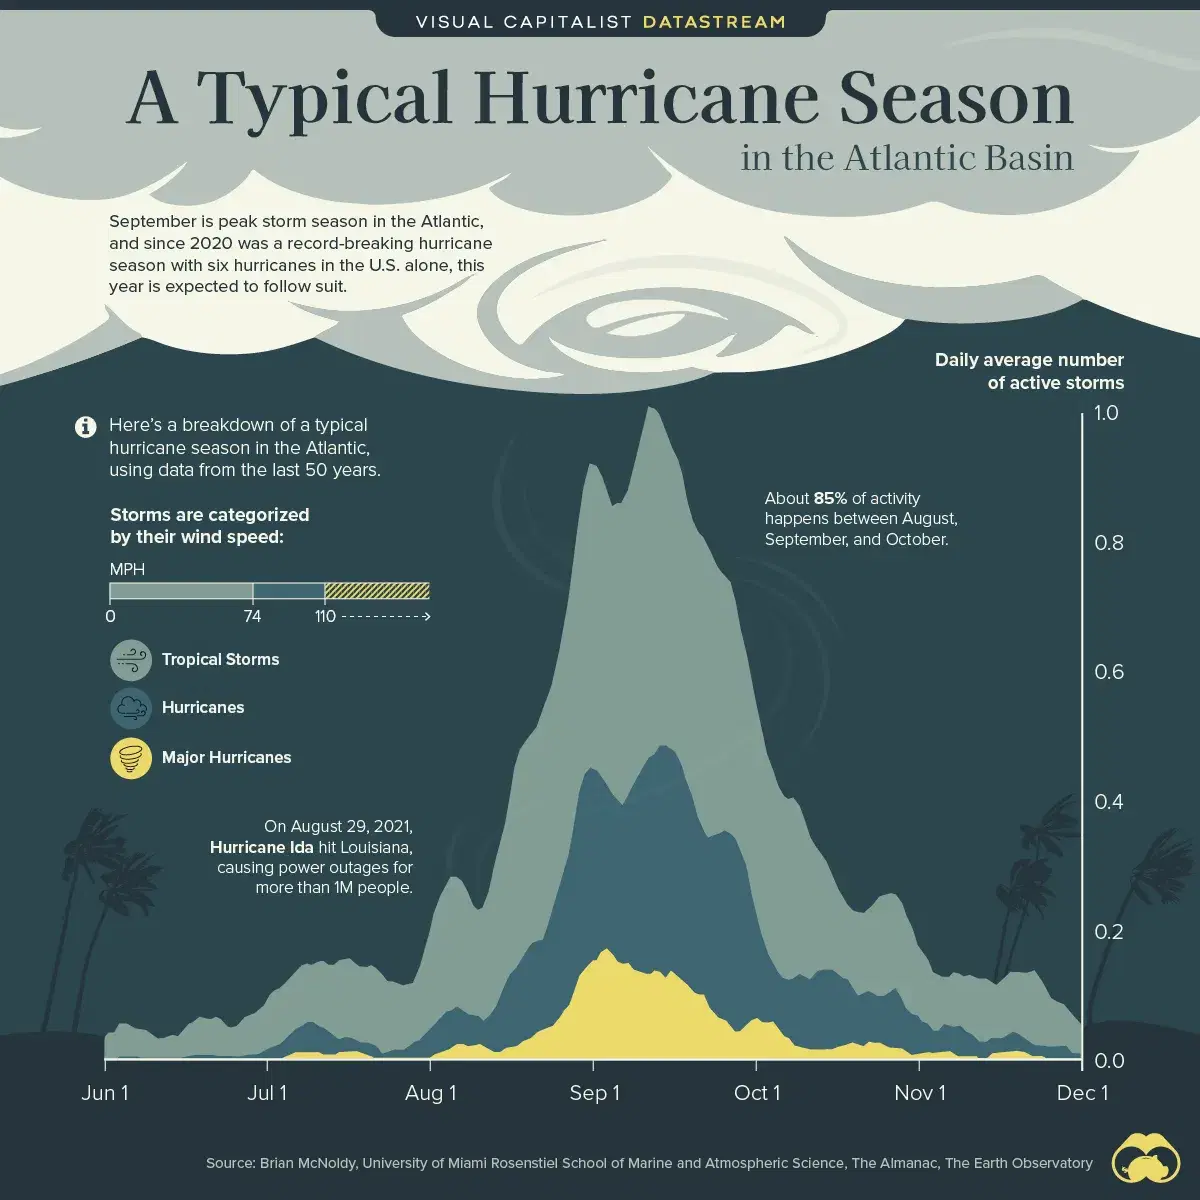 Visualizing the Typical Atlantic Hurricane Season